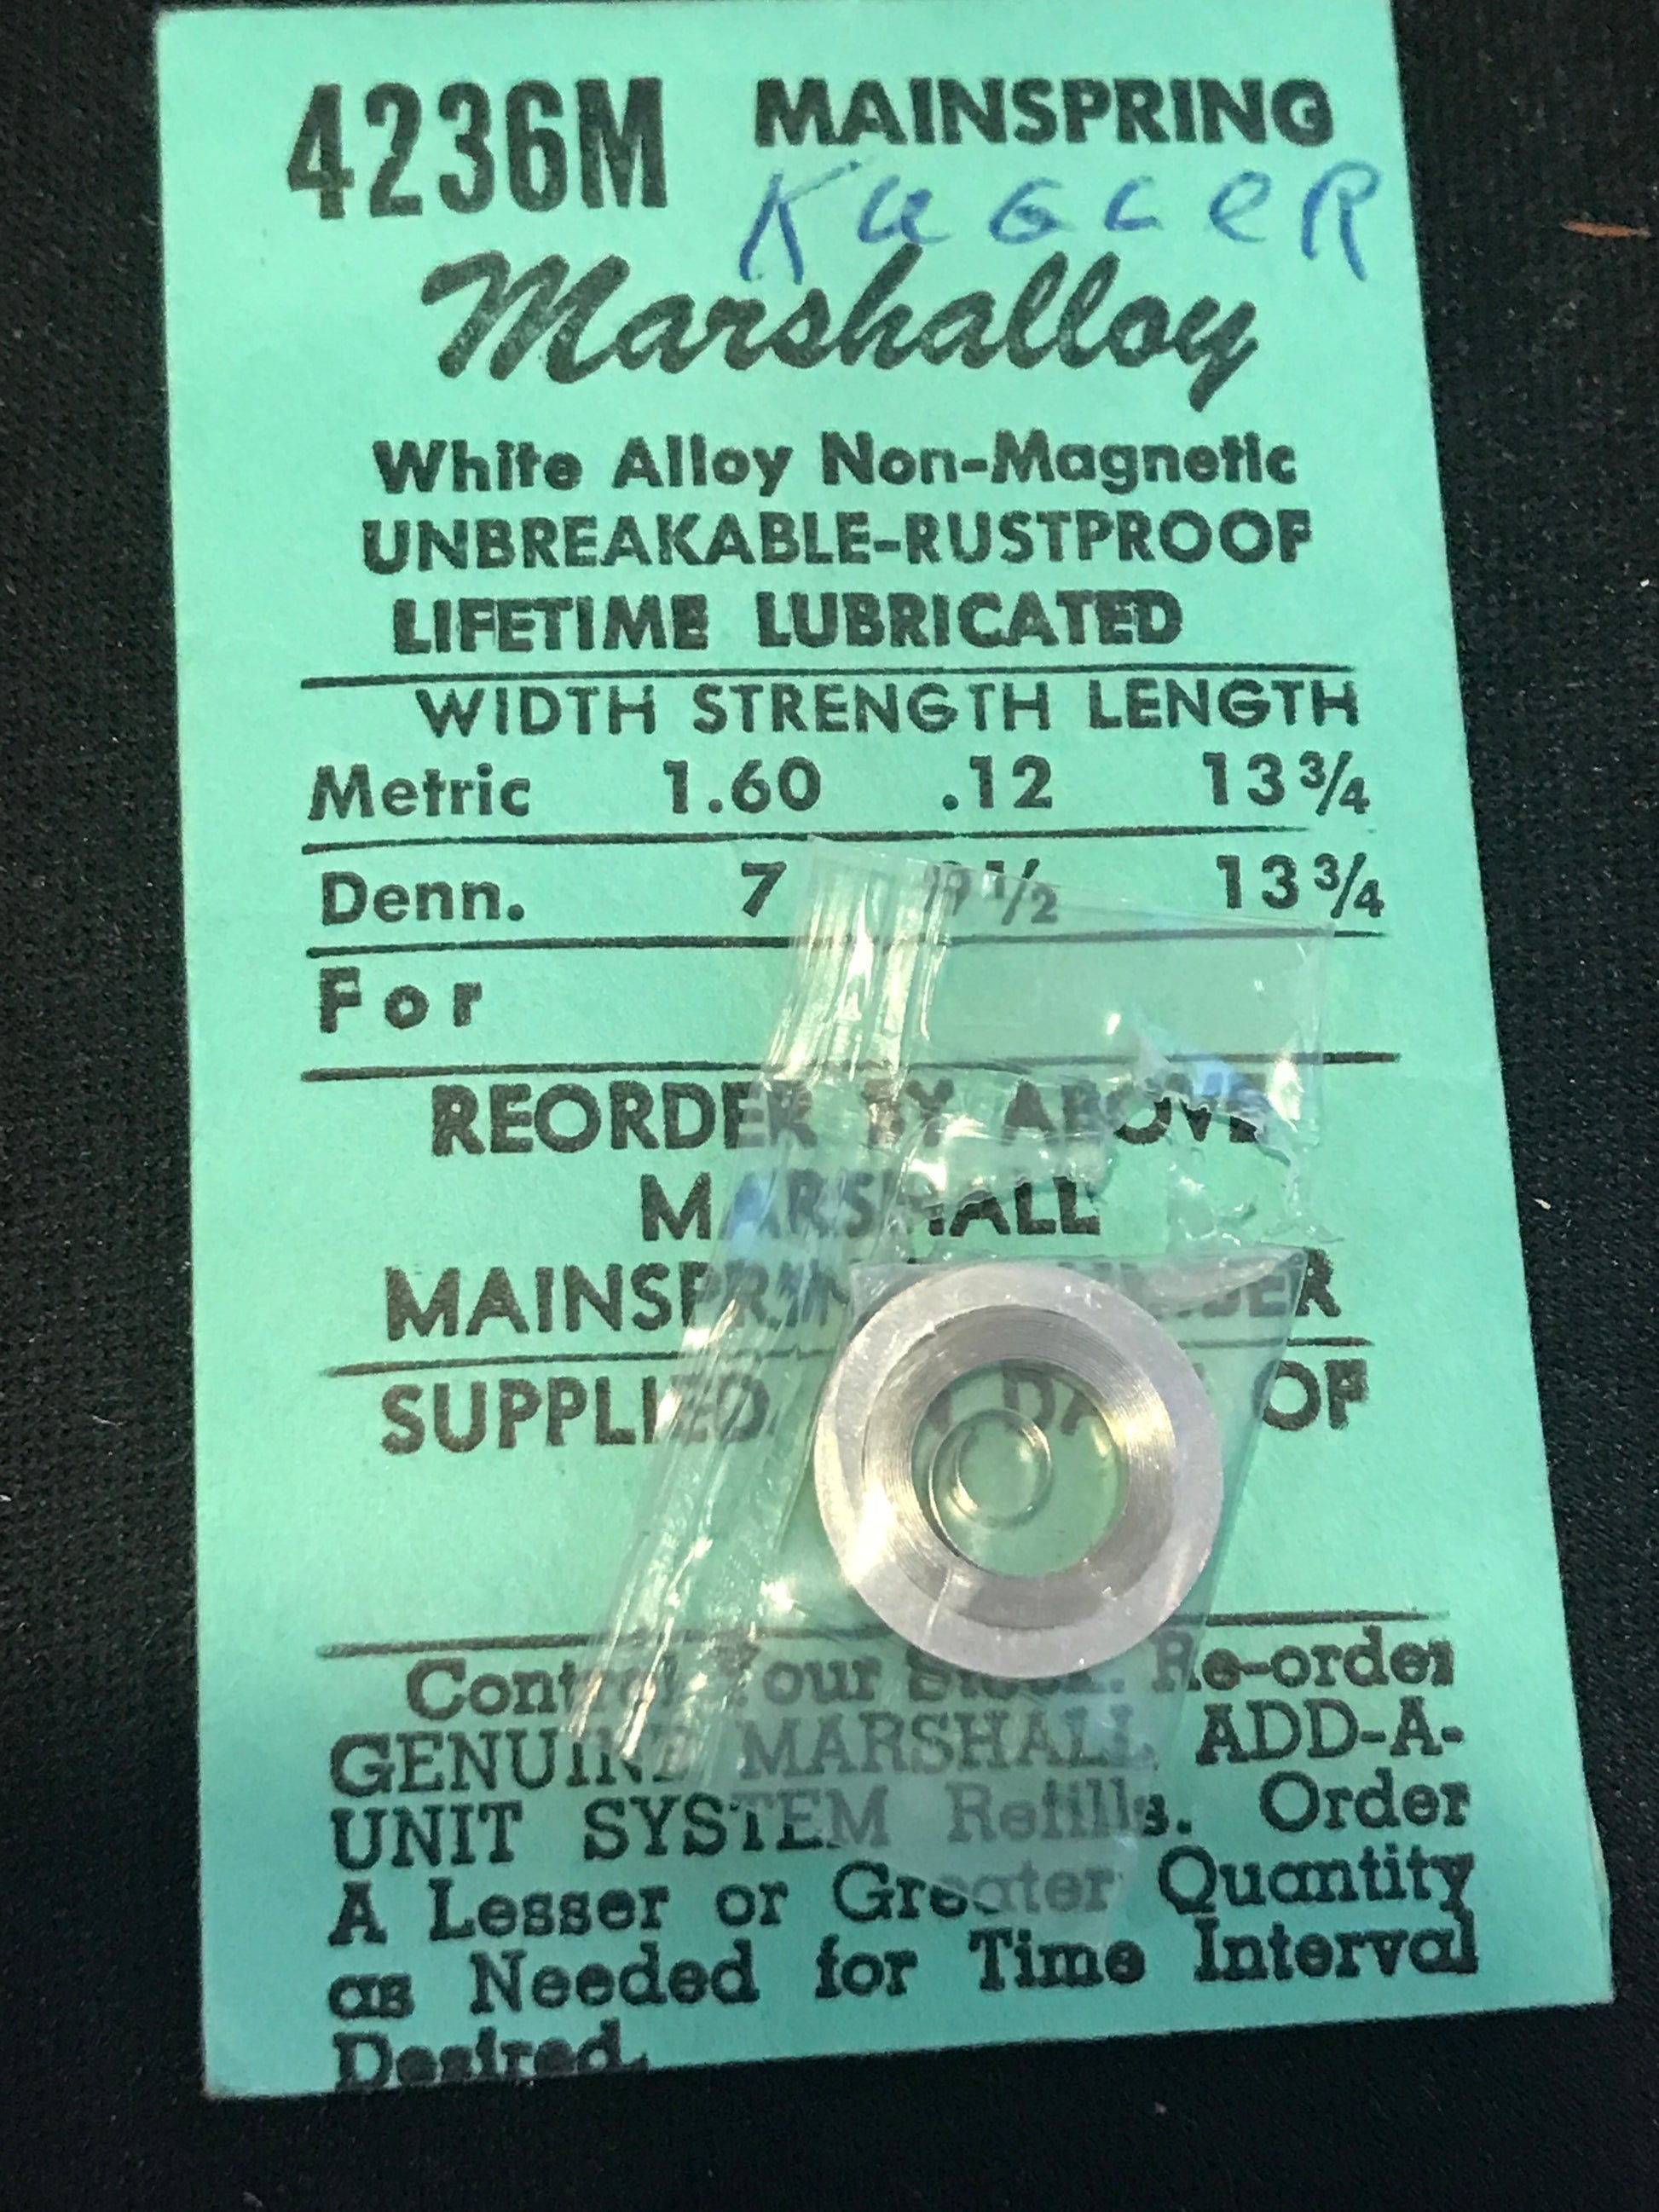 C&E Marshall Marshalloy Mainspring 4236M for Standard (ST) 96, 96-4, 961 thru 969 - Alloy